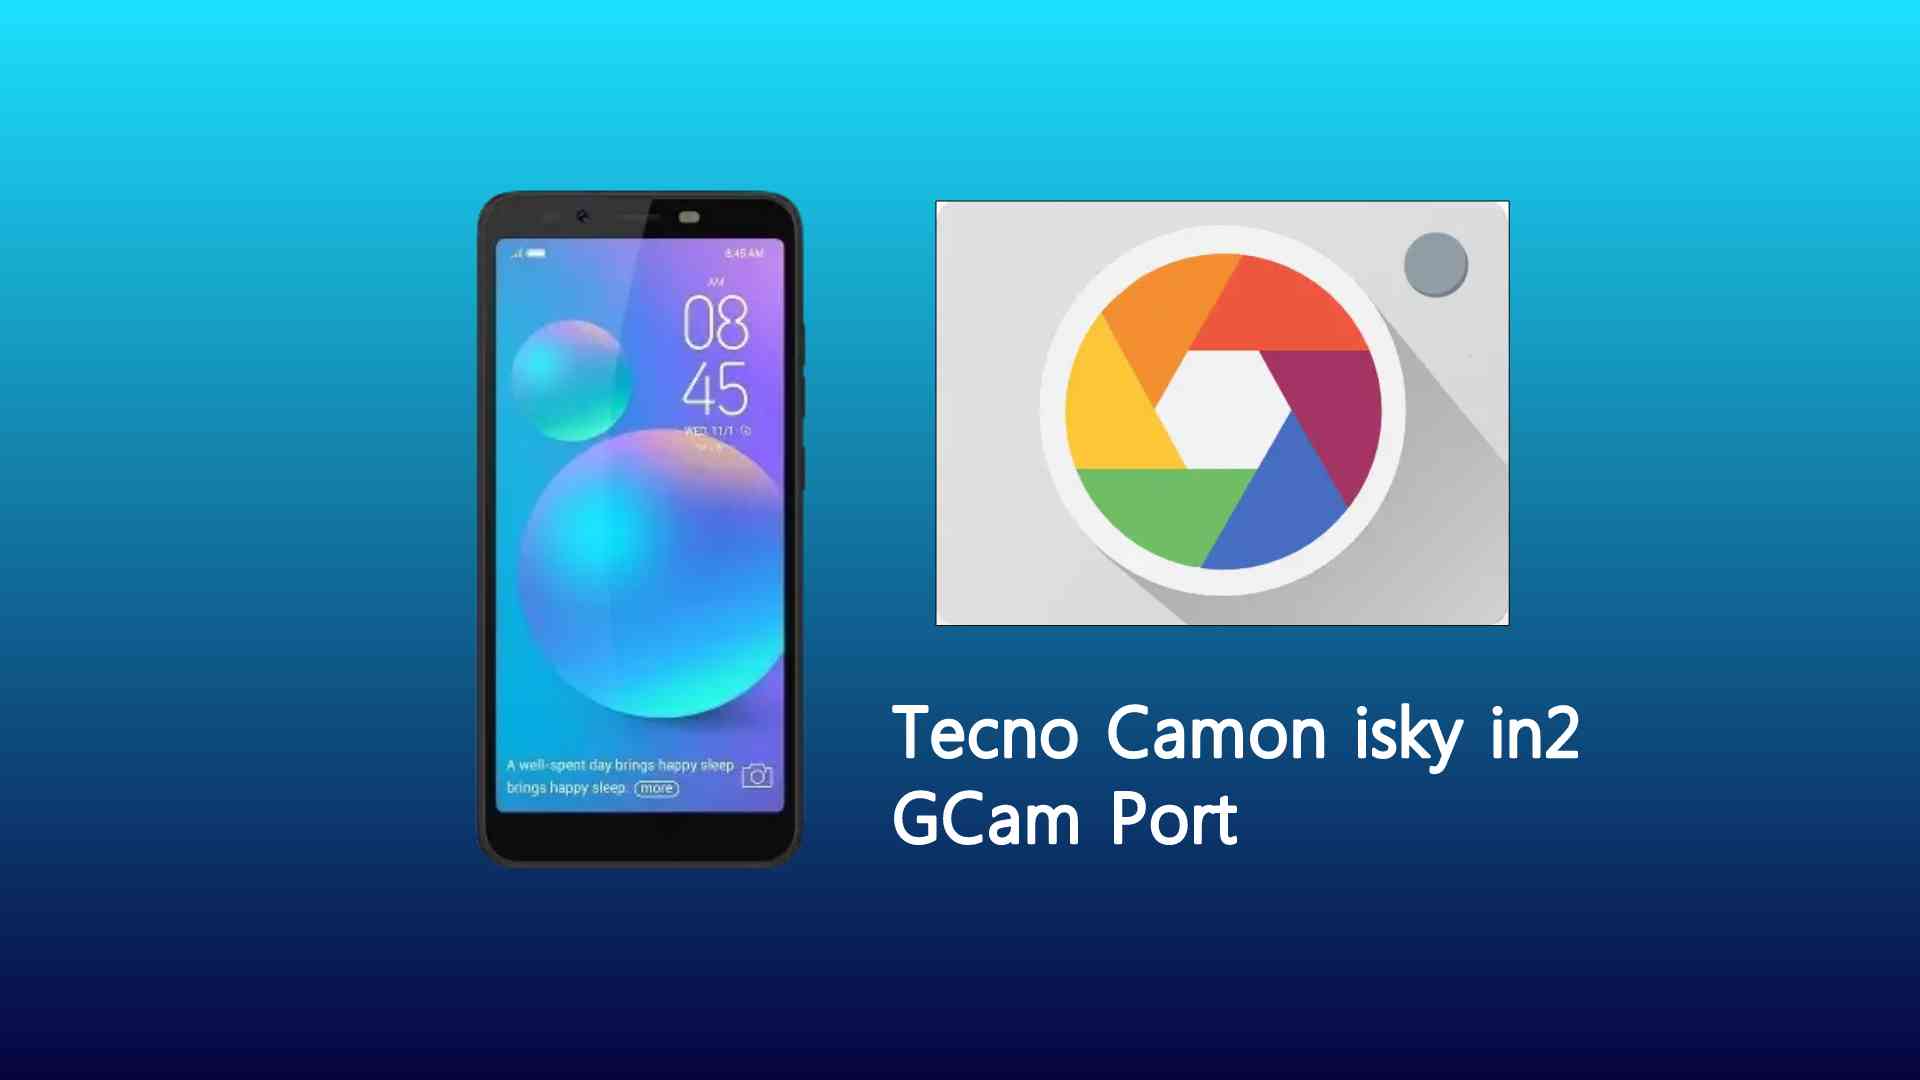 Tecno Camon isky in2 GCam Port